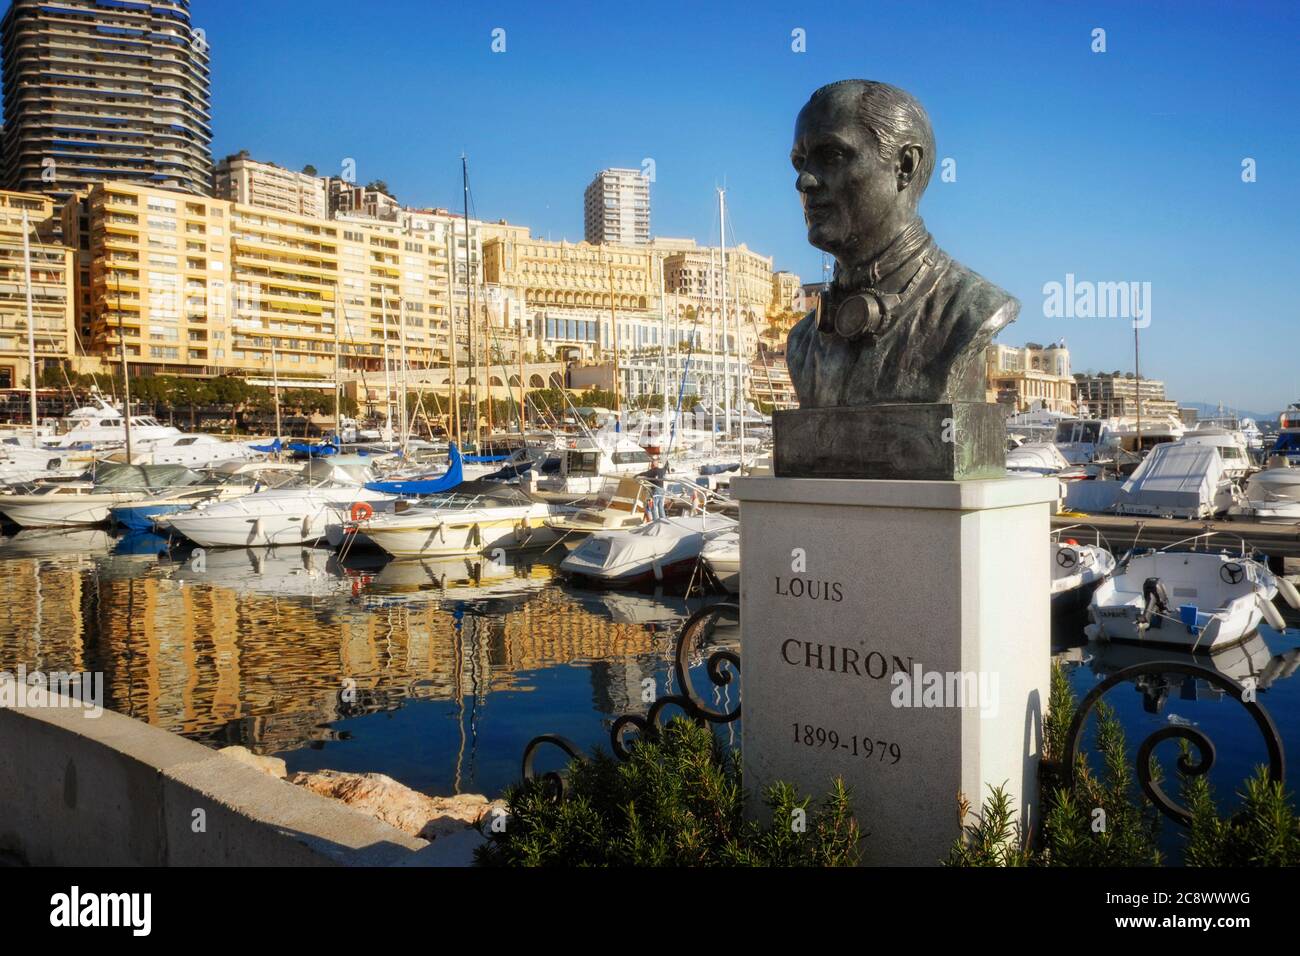 MONTE CARLO, MONACO - APRILE 2008: Busto del pilota monegasco Louis Chiron davanti al porto di Monaco Foto Stock